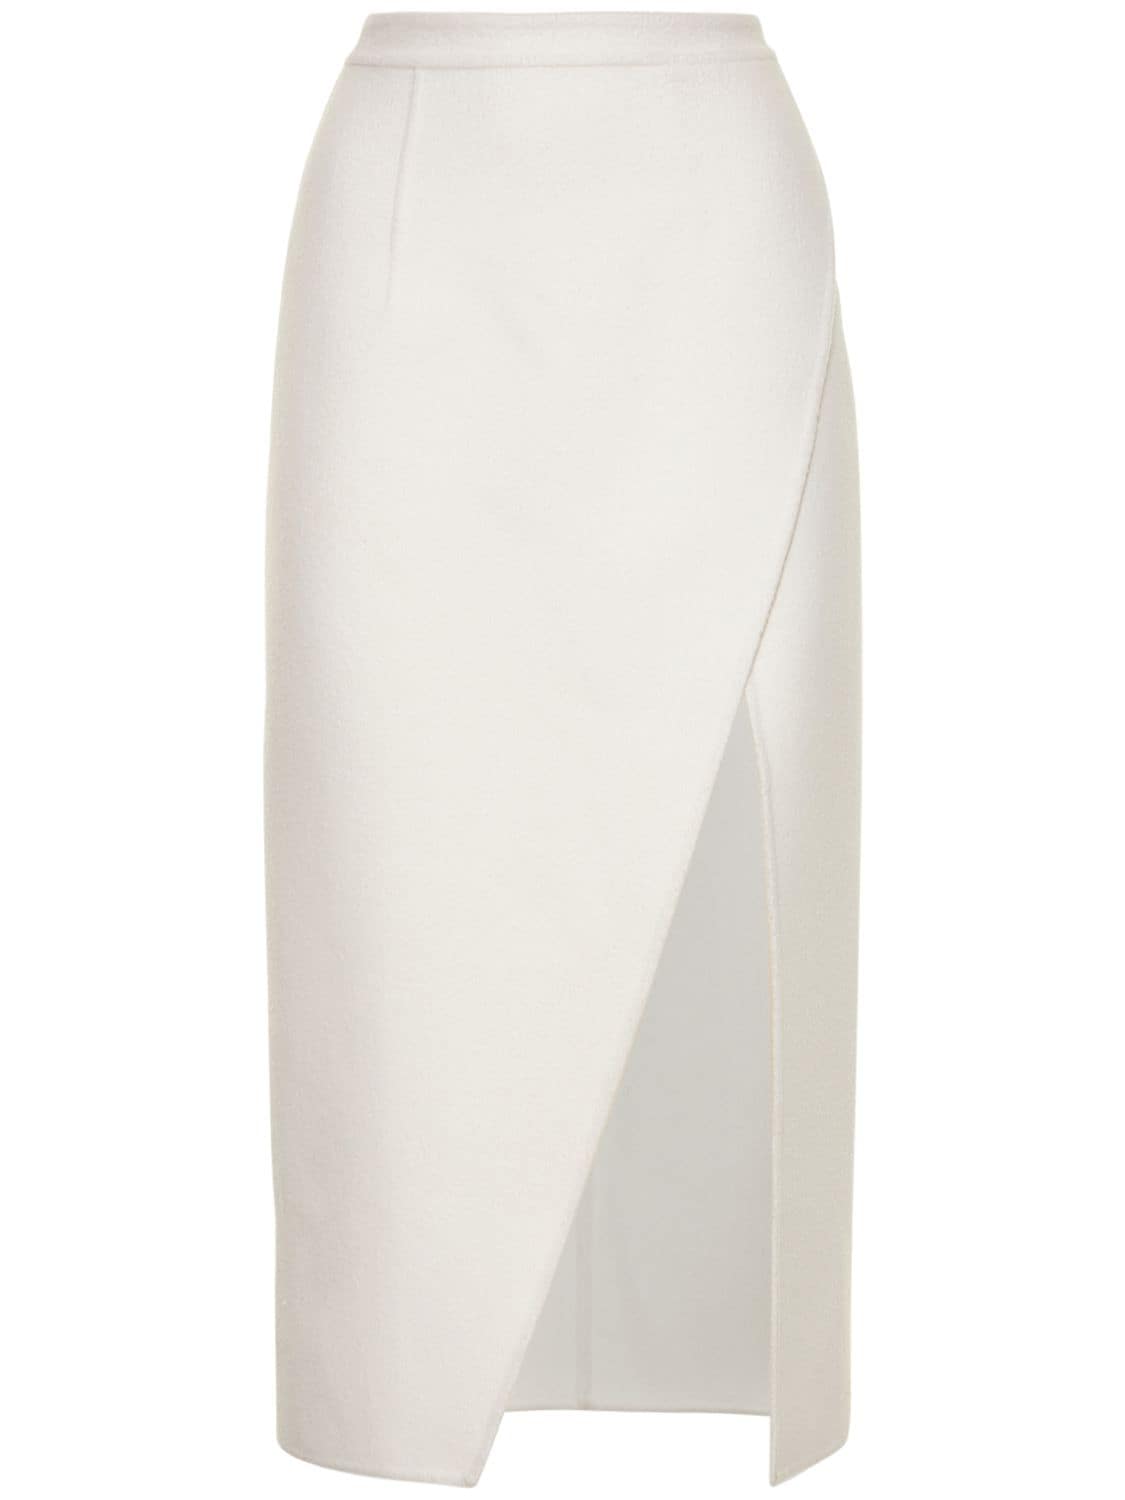 Midi Circle Skirt #White Skirt #Delvaux Le Brillant Bag #Self